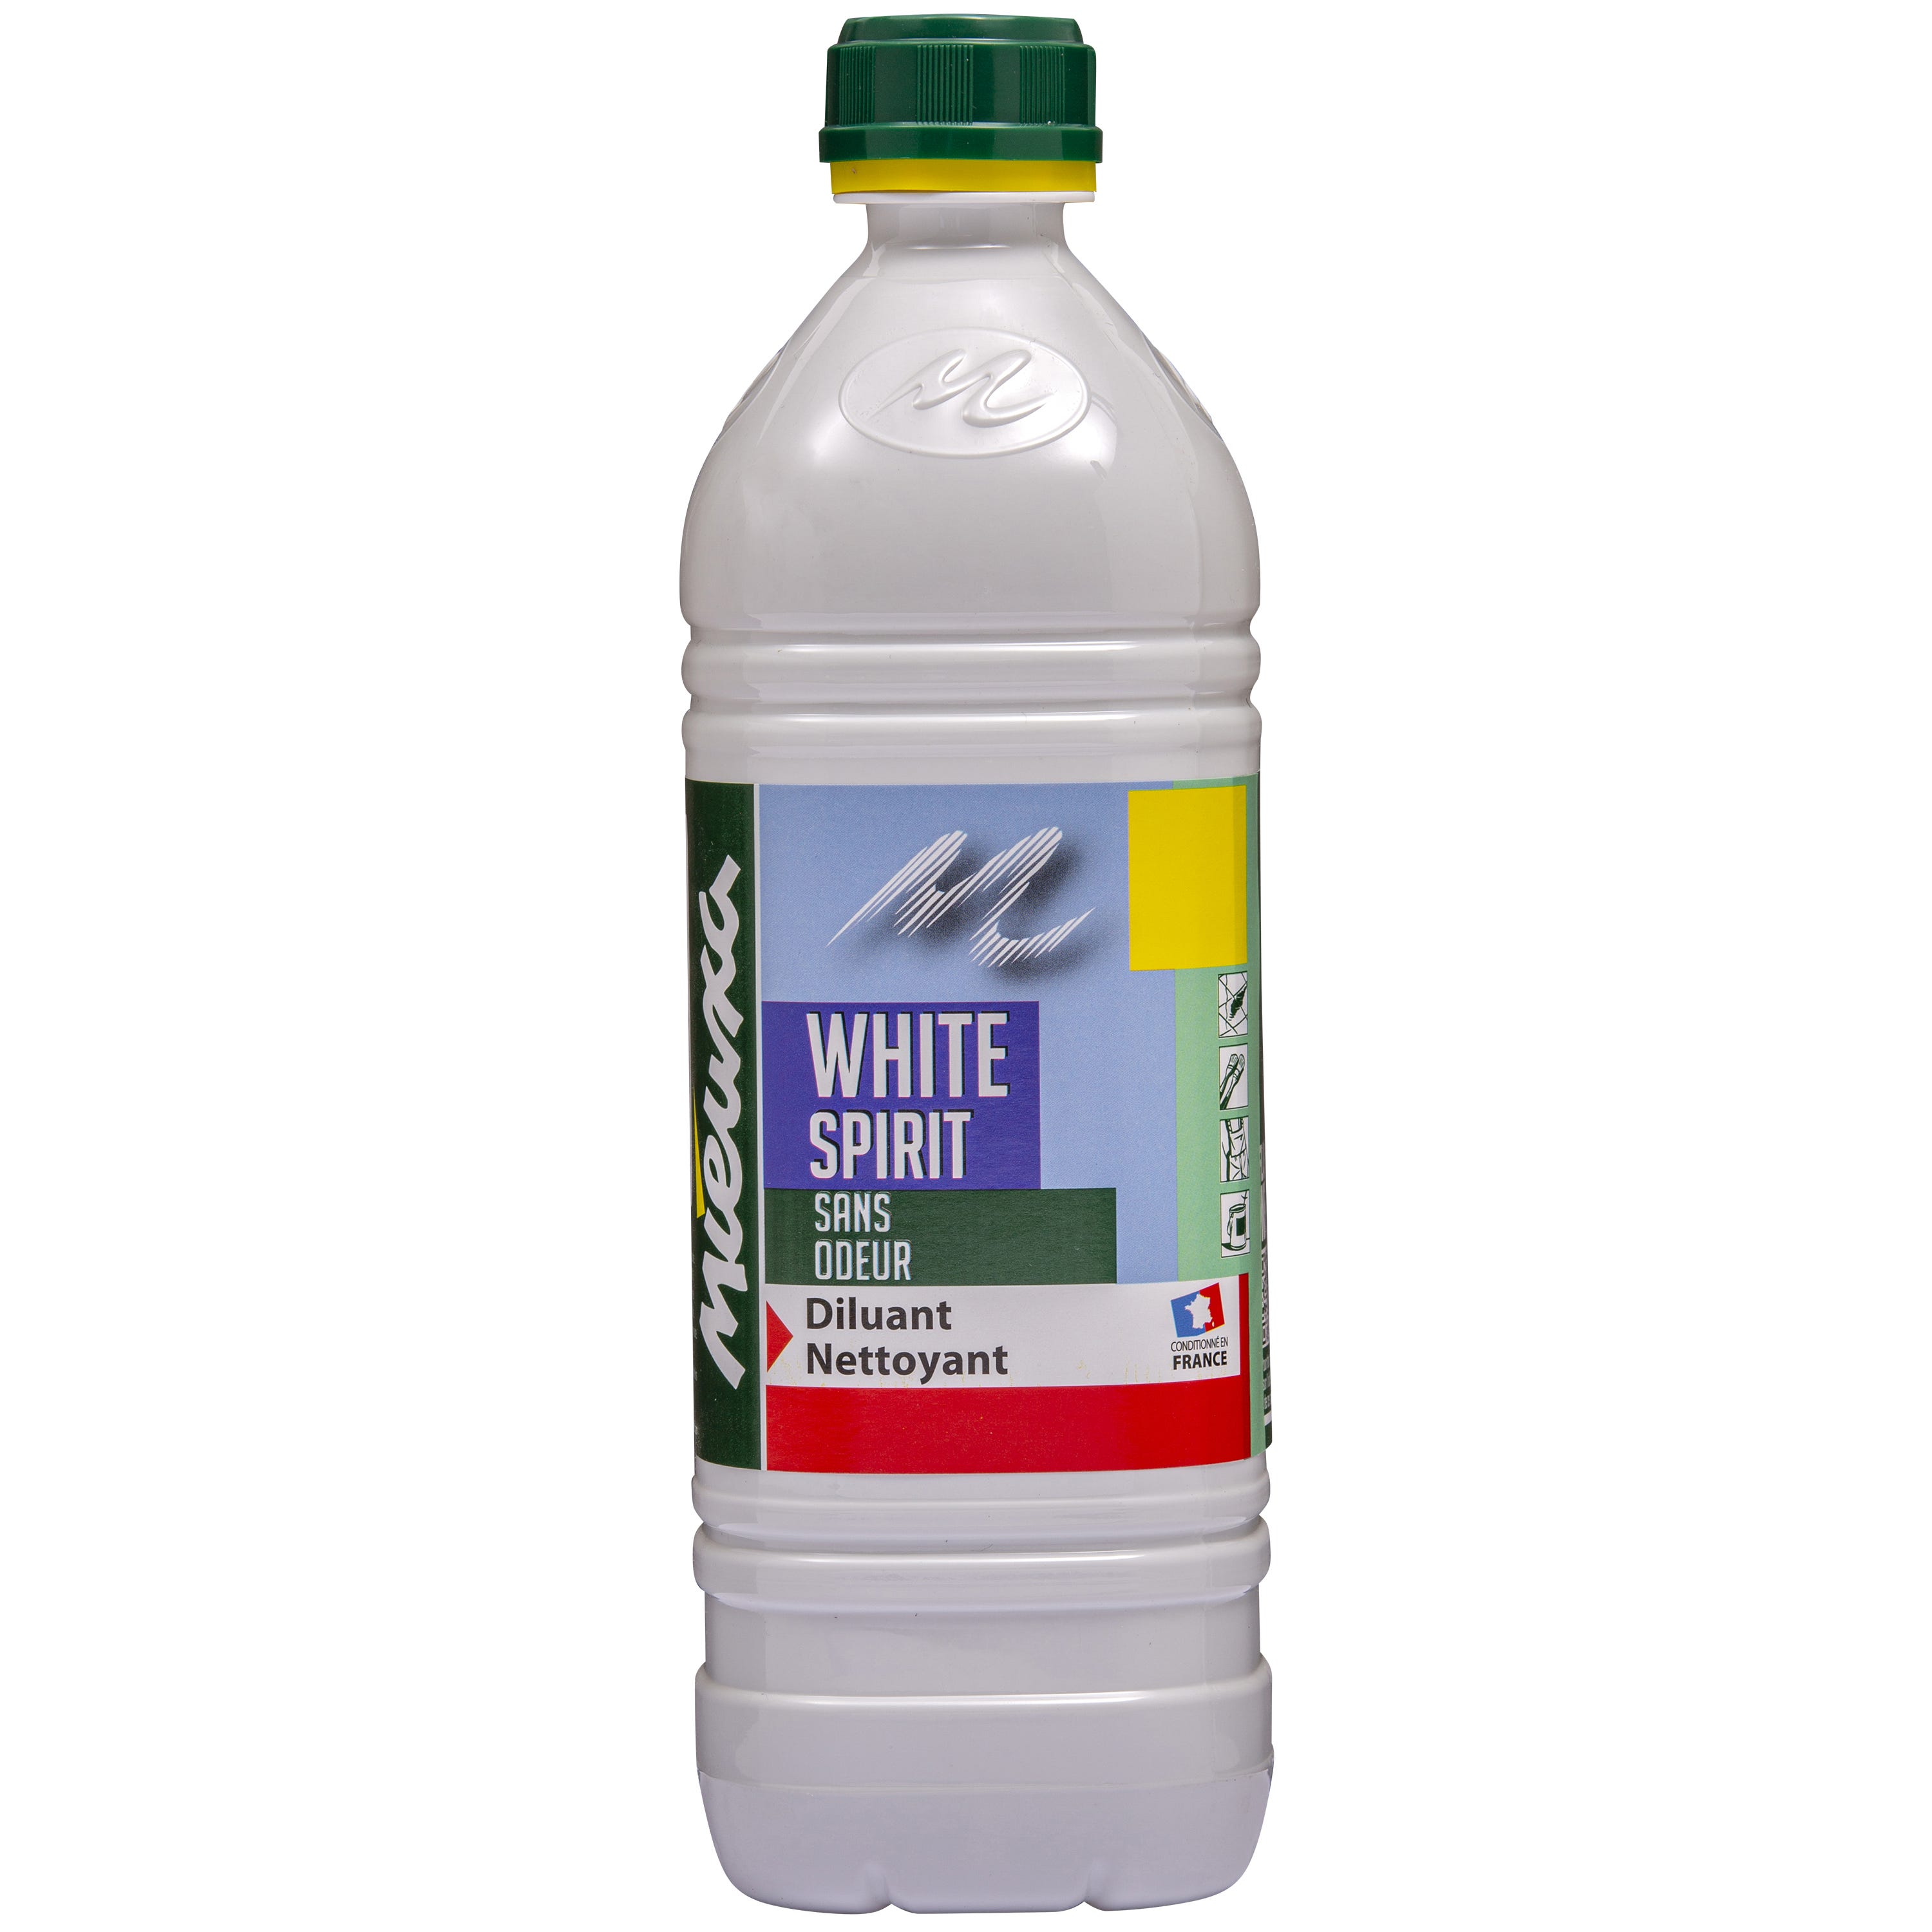 White spirit MIEUXA Sans odeur, 1 l